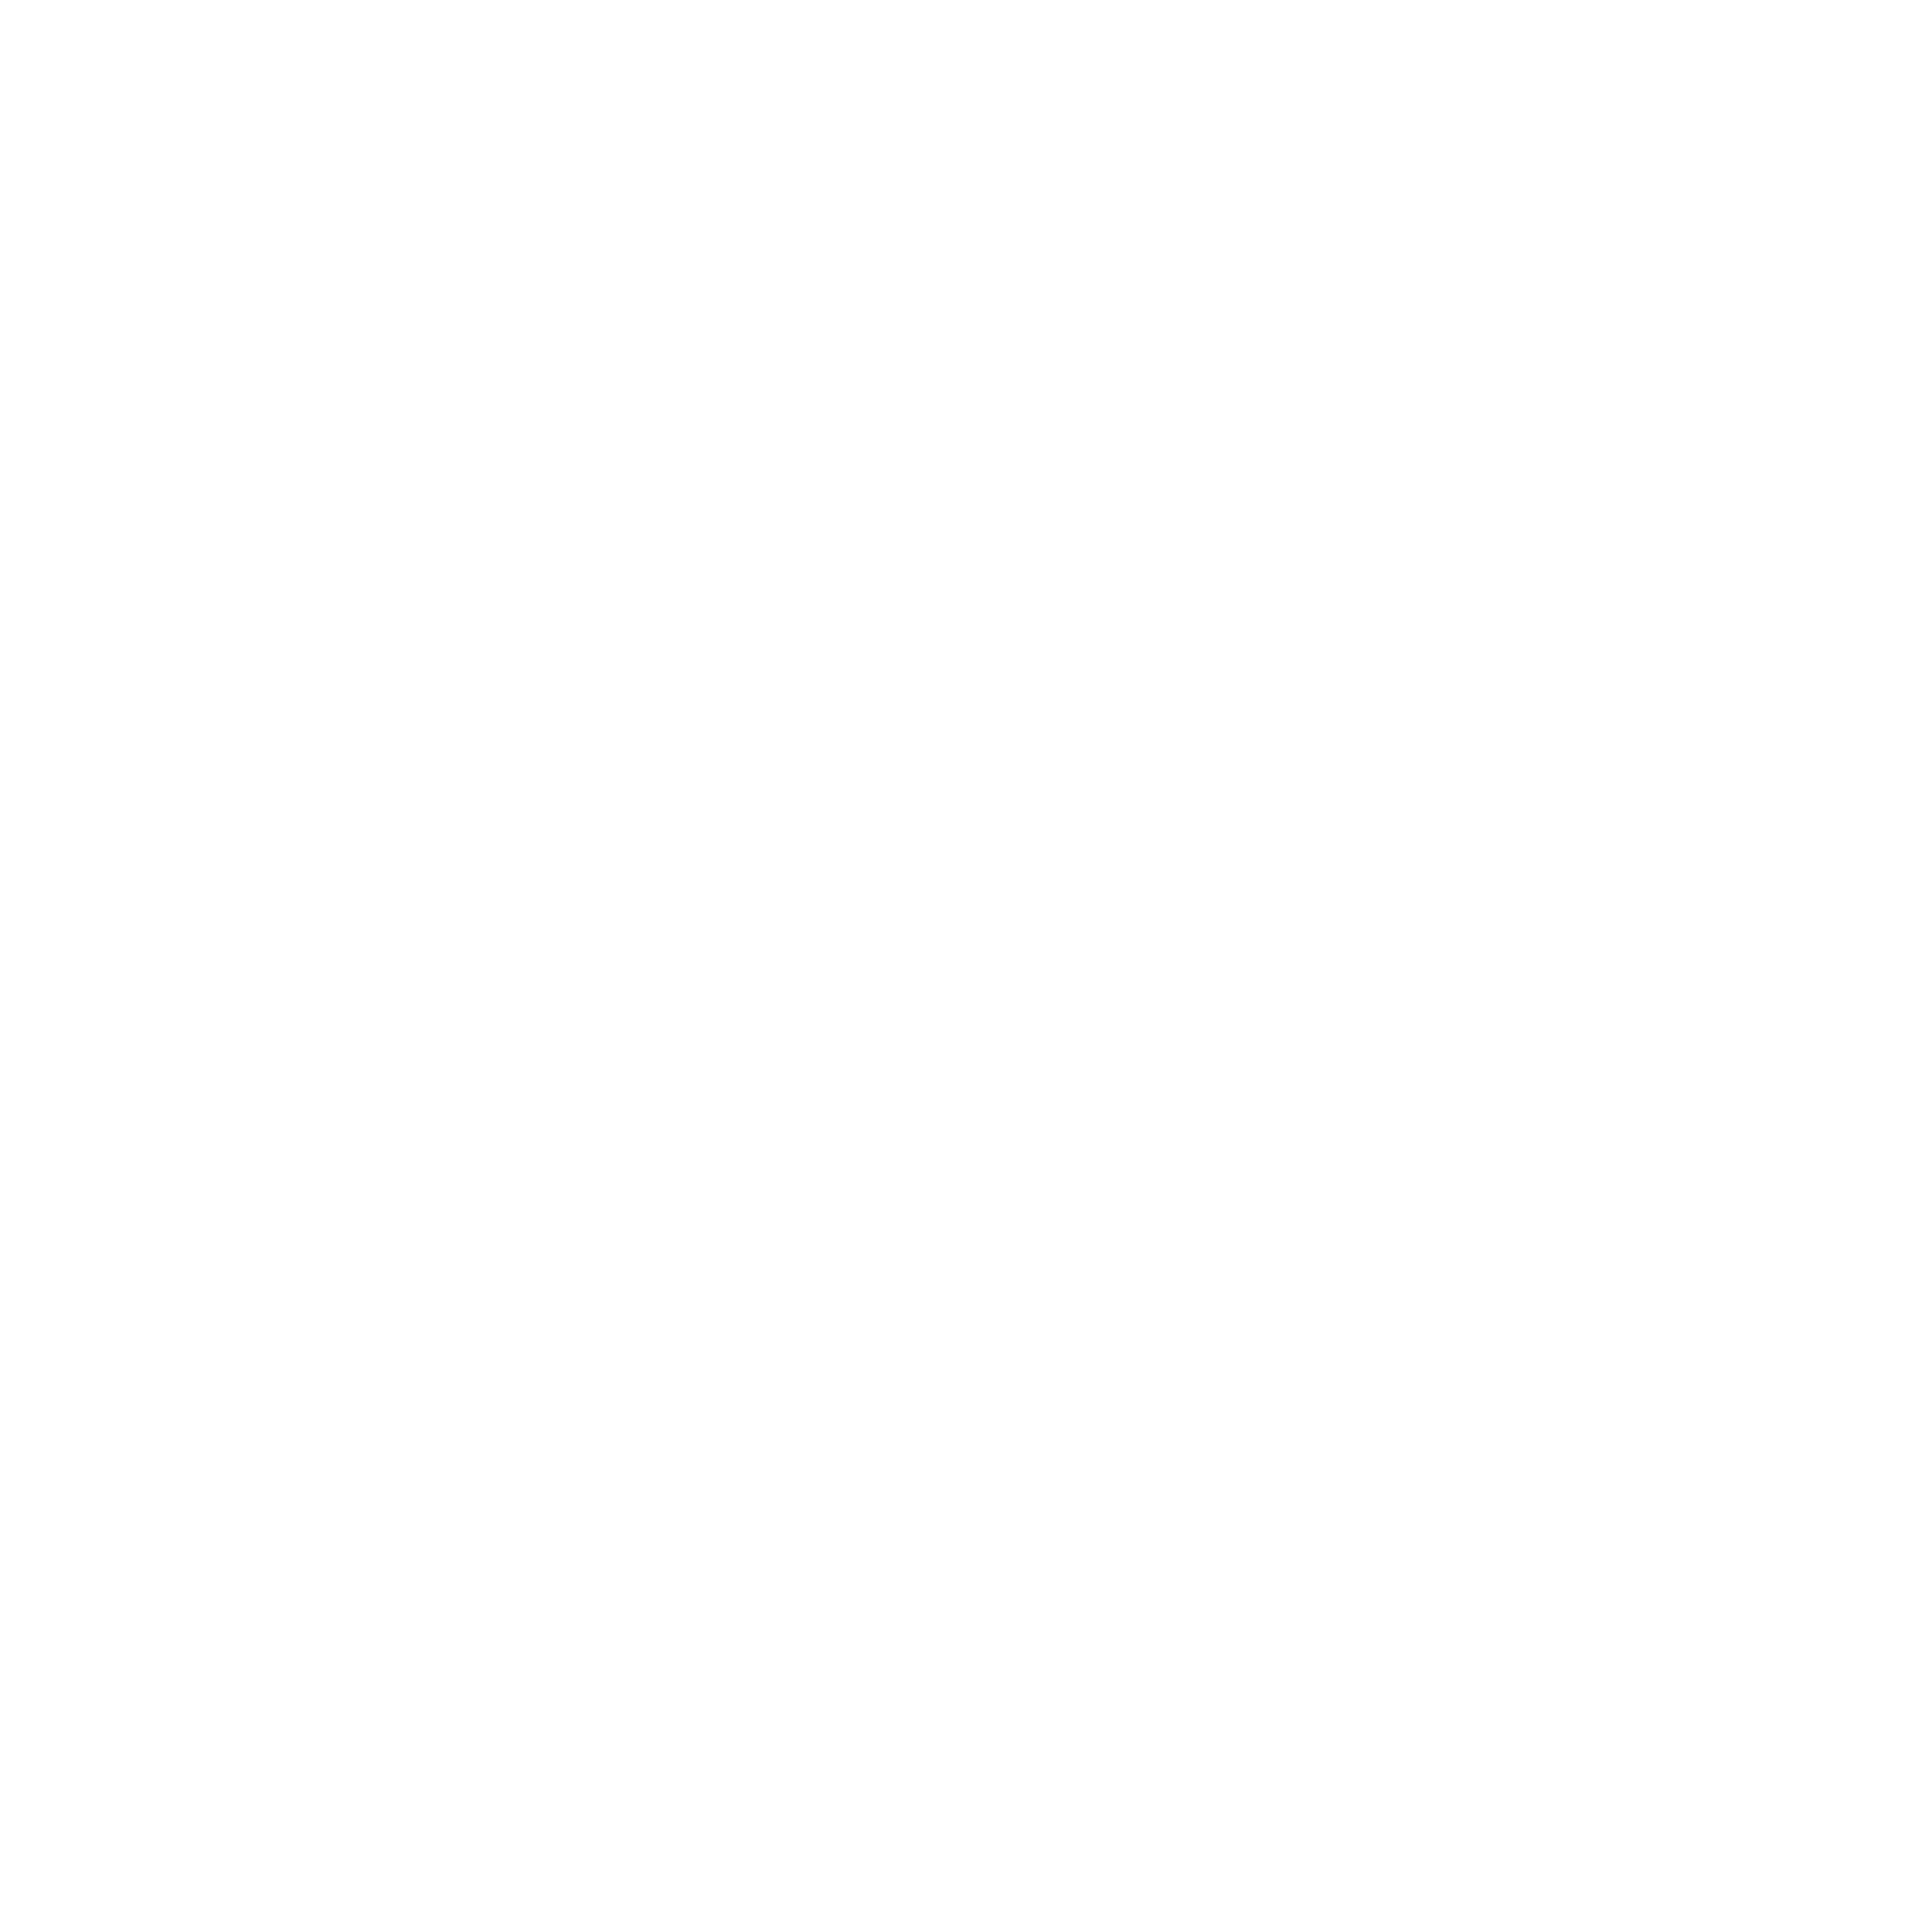 VRWRK